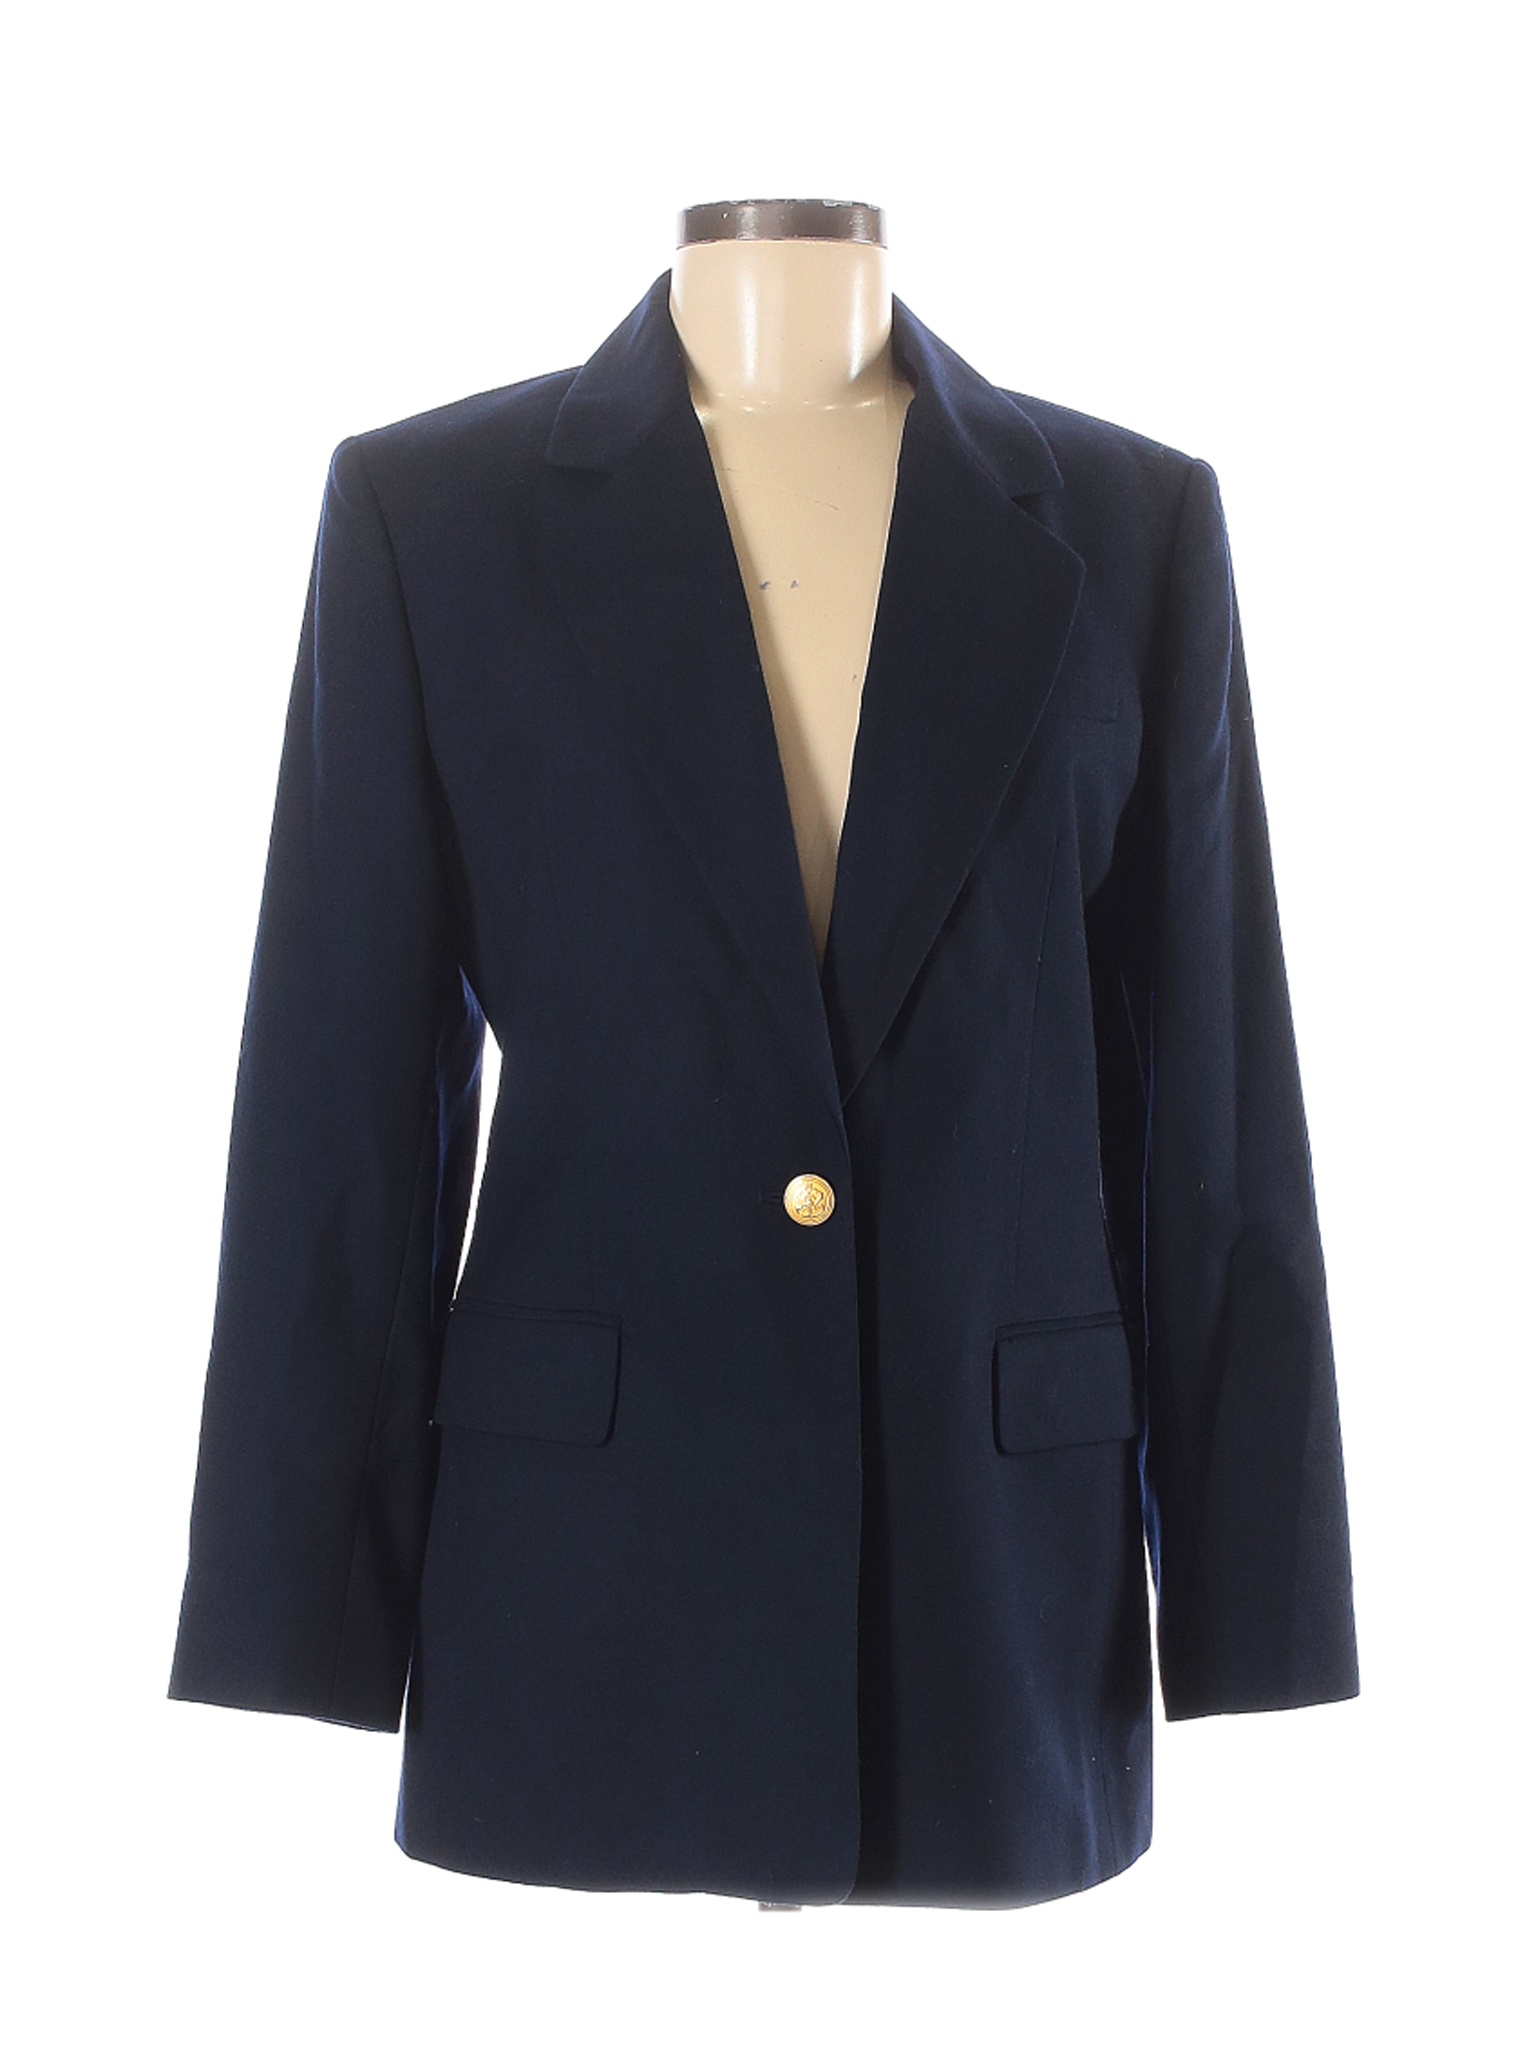 Talbots Women Blue Wool Blazer 6 | eBay